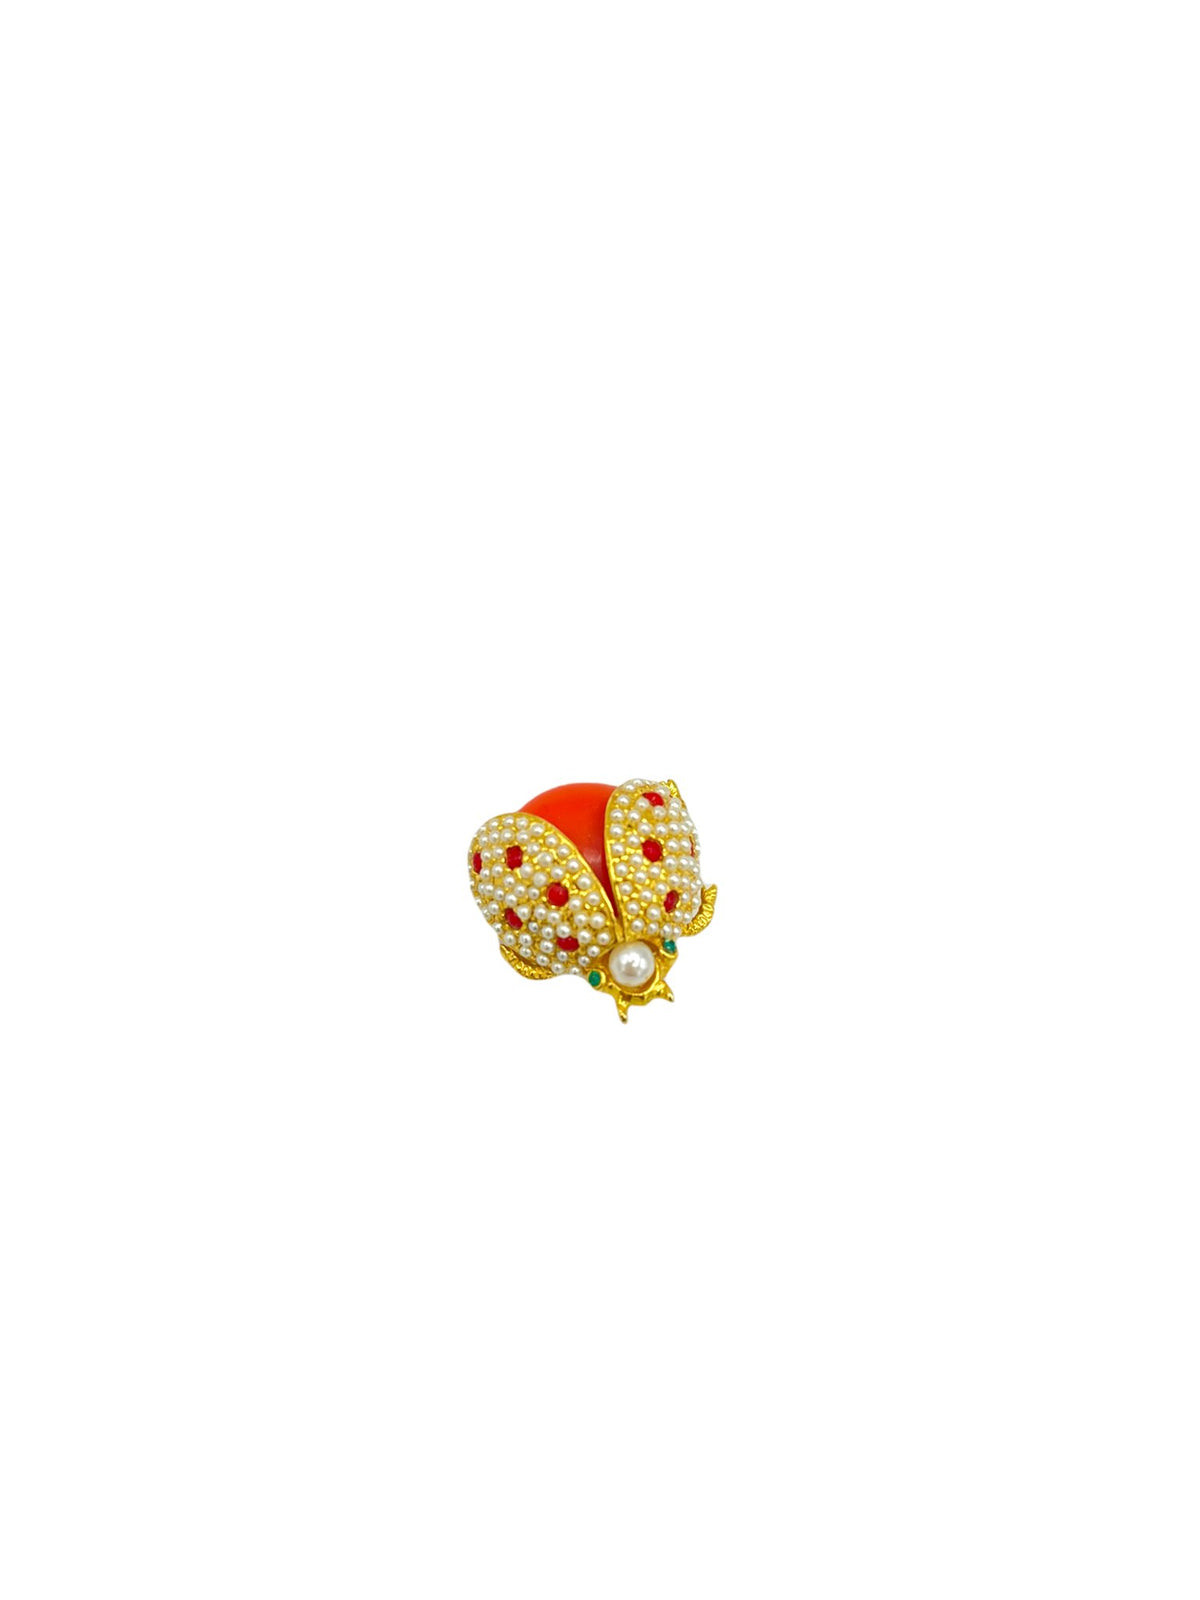 Hattie Carnegie Coral Pearl Ladybug Brooch - 24 Wishes Vintage Jewelry